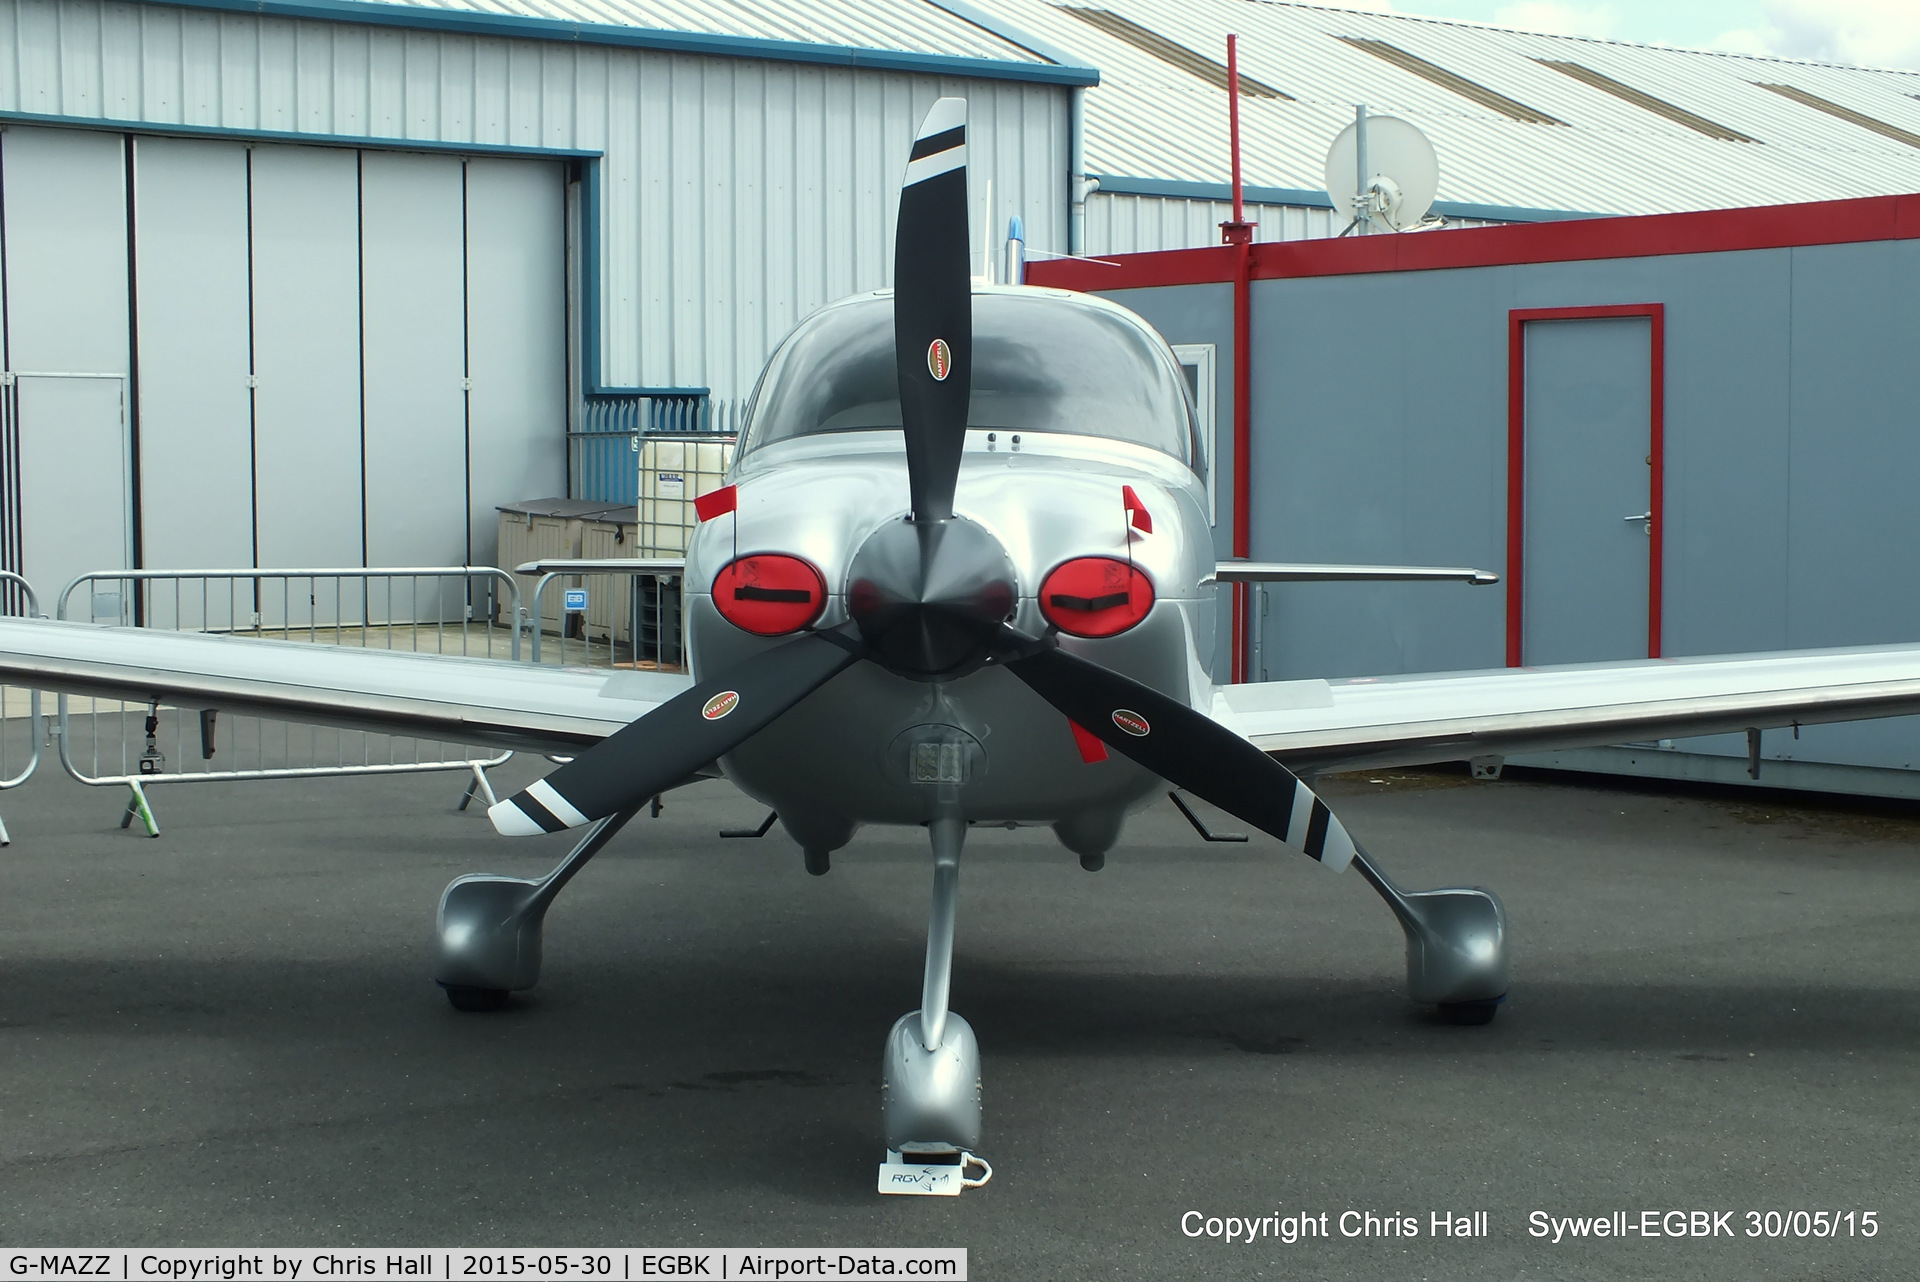 G-MAZZ, 2014 Cirrus SR22 C/N 4135, at Aeroexpo 2015